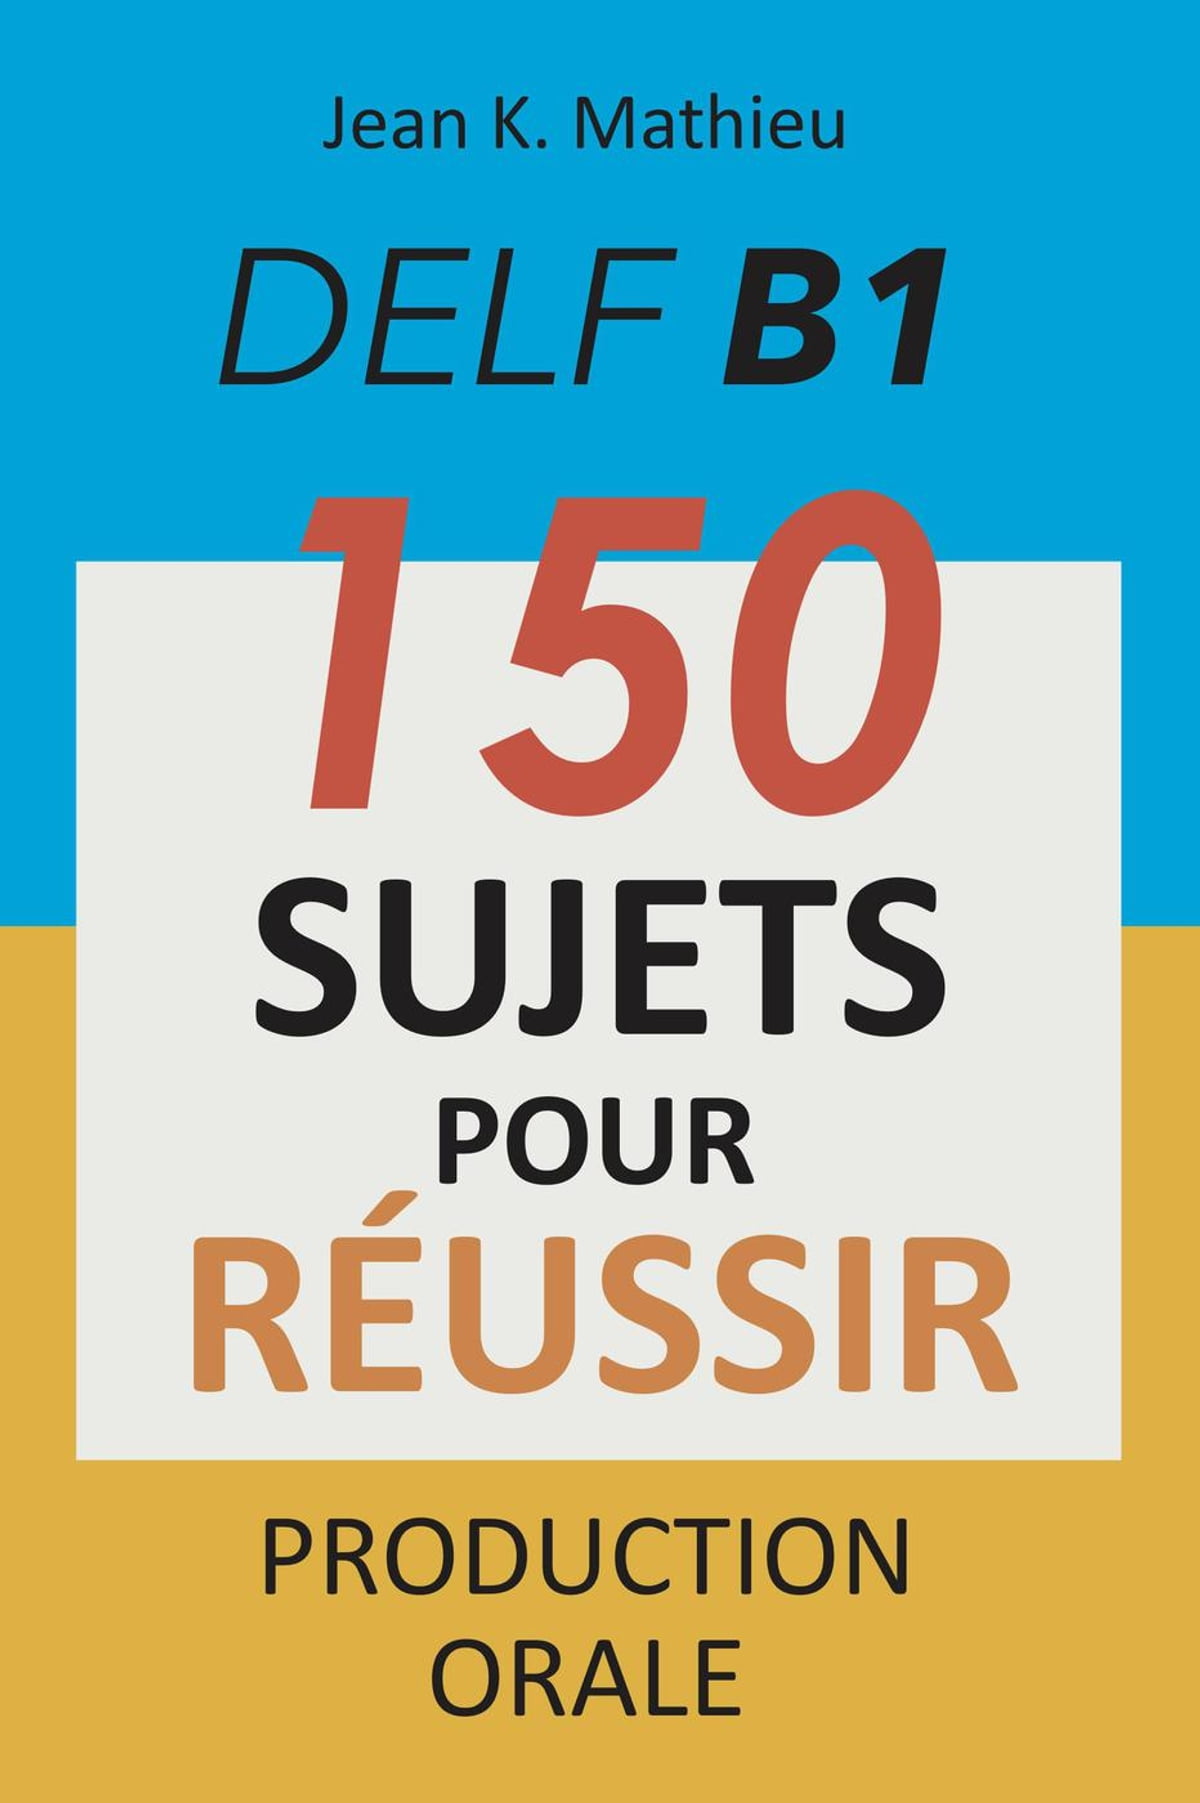 备考Delf B1 必备150个口试必考练习 DELF B1 Production Orale - 150 sujets pour réussir